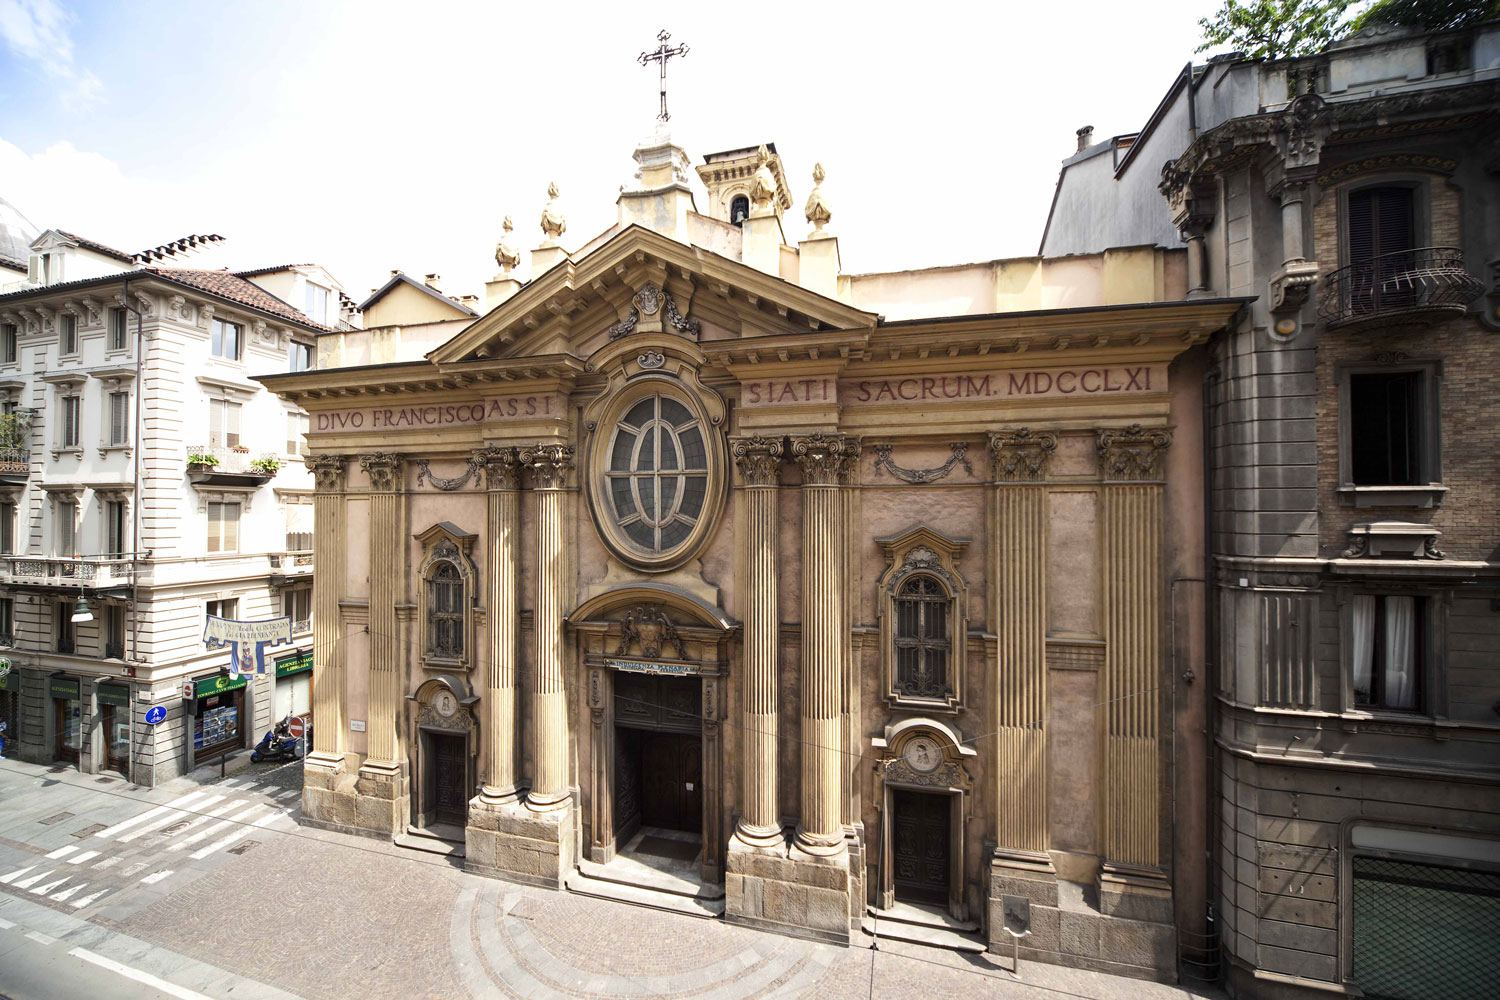 La chiesa dei francescani nei secoli @ Chiesa di San Francesco d'Assisi